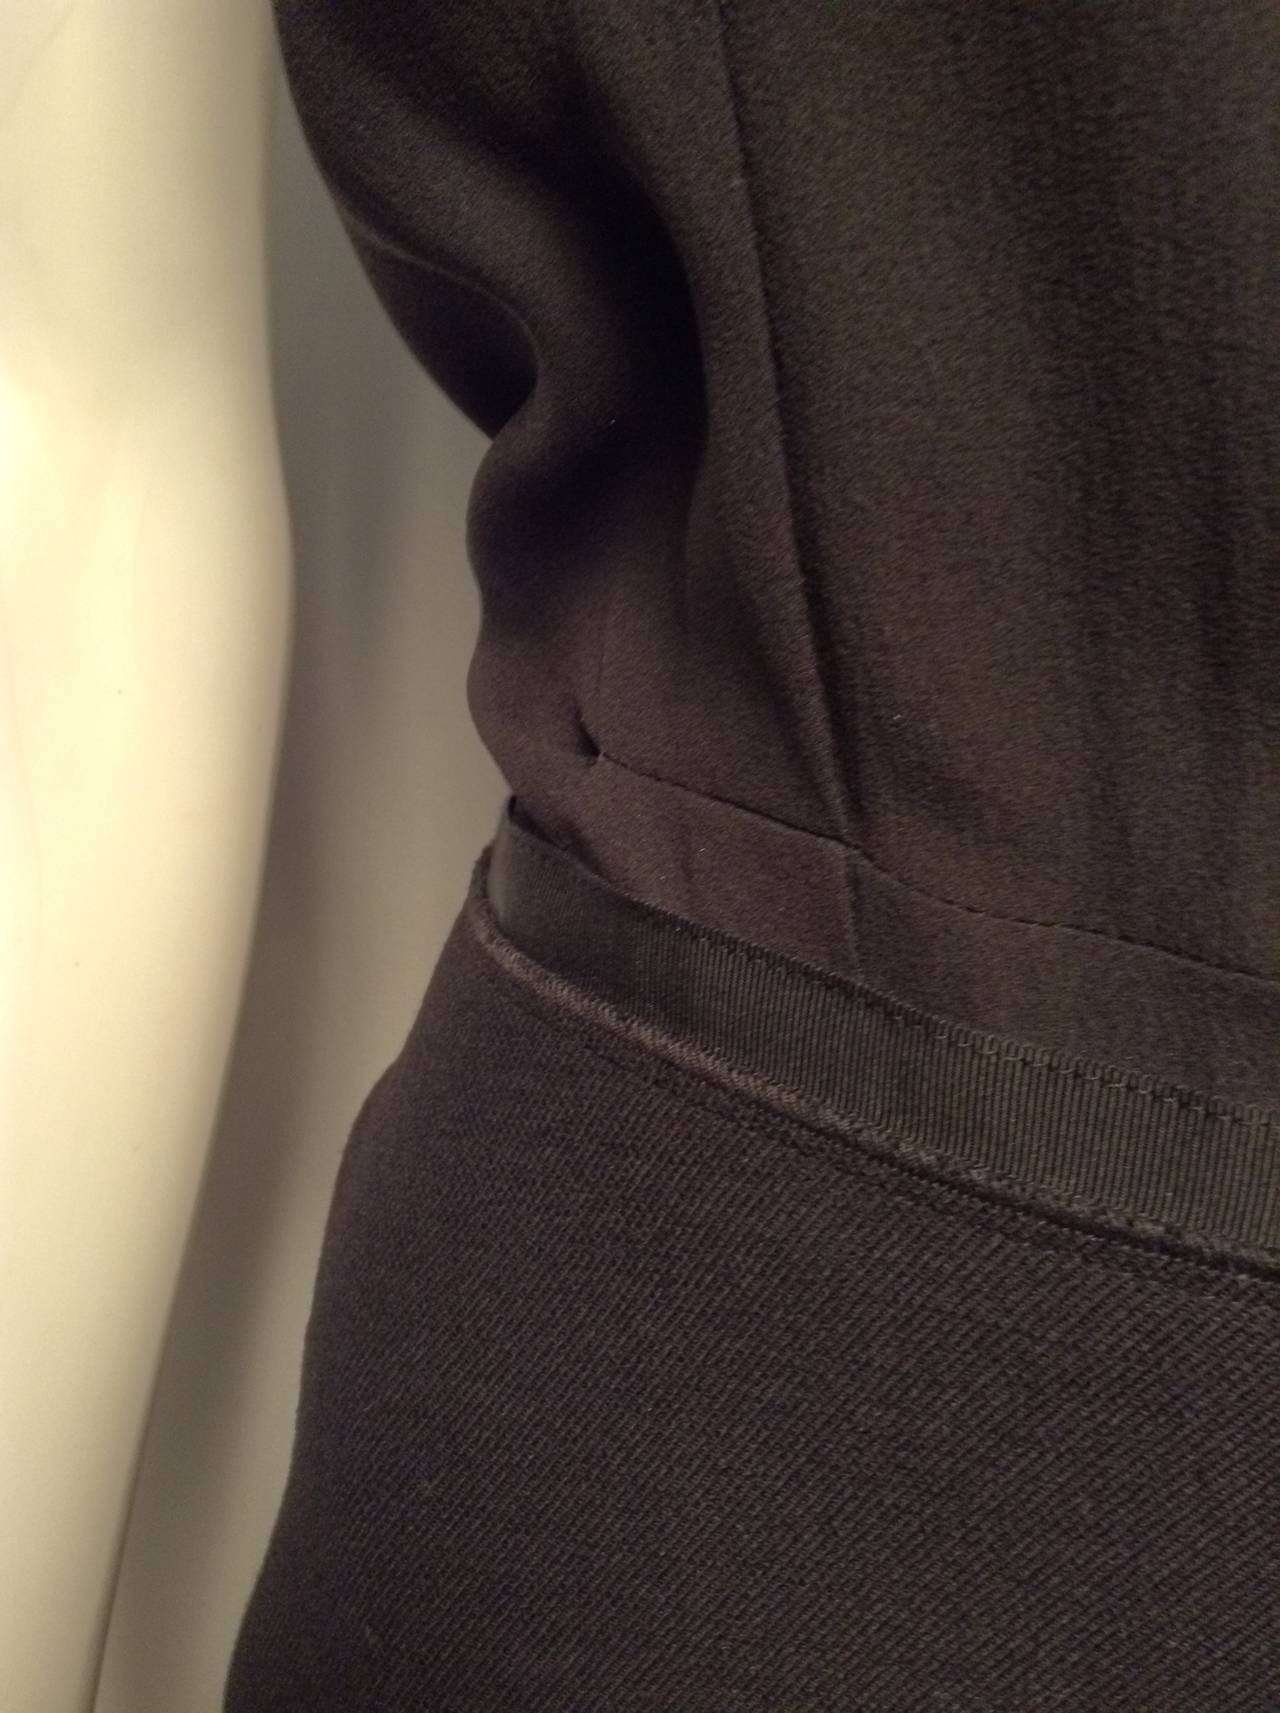 Women's Nina Ricci Black Cocktail Dress Size 42/10 2012 For Sale